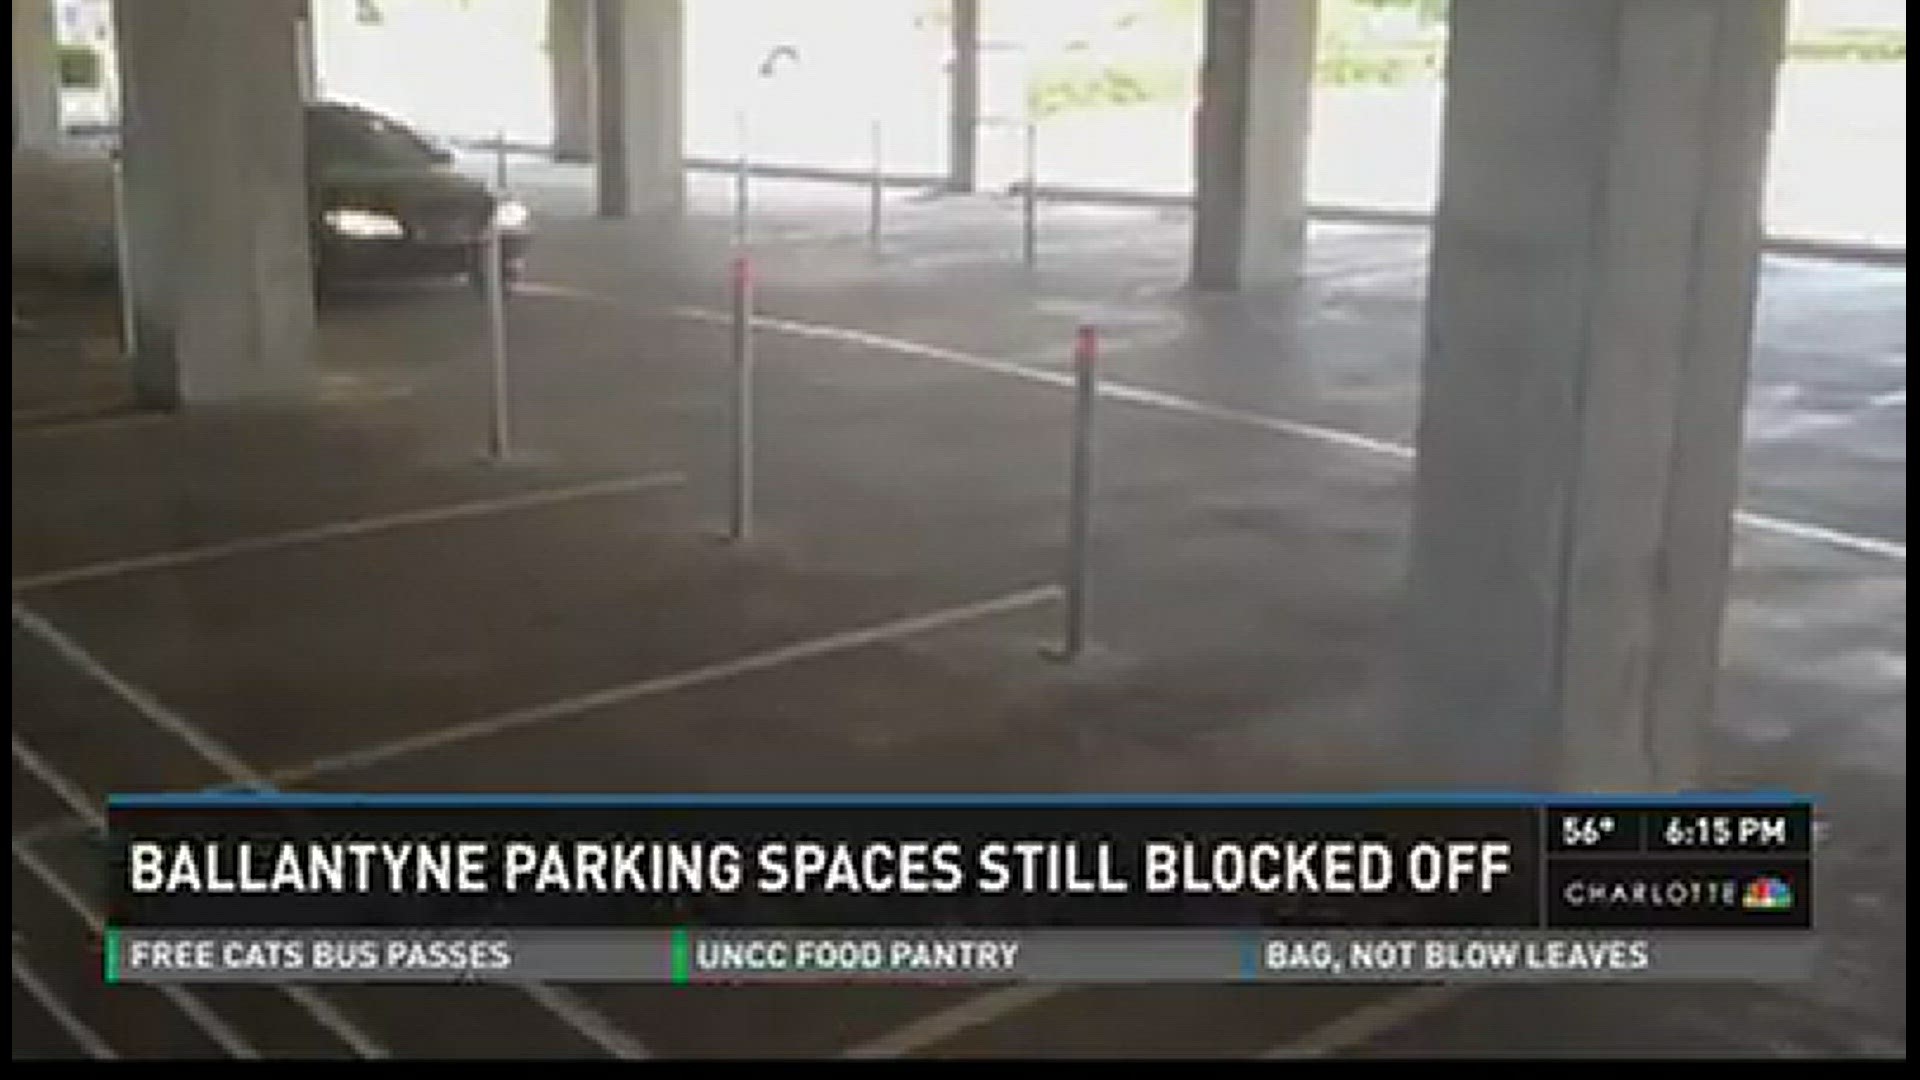 Ballantyne parking spaces still blocked off